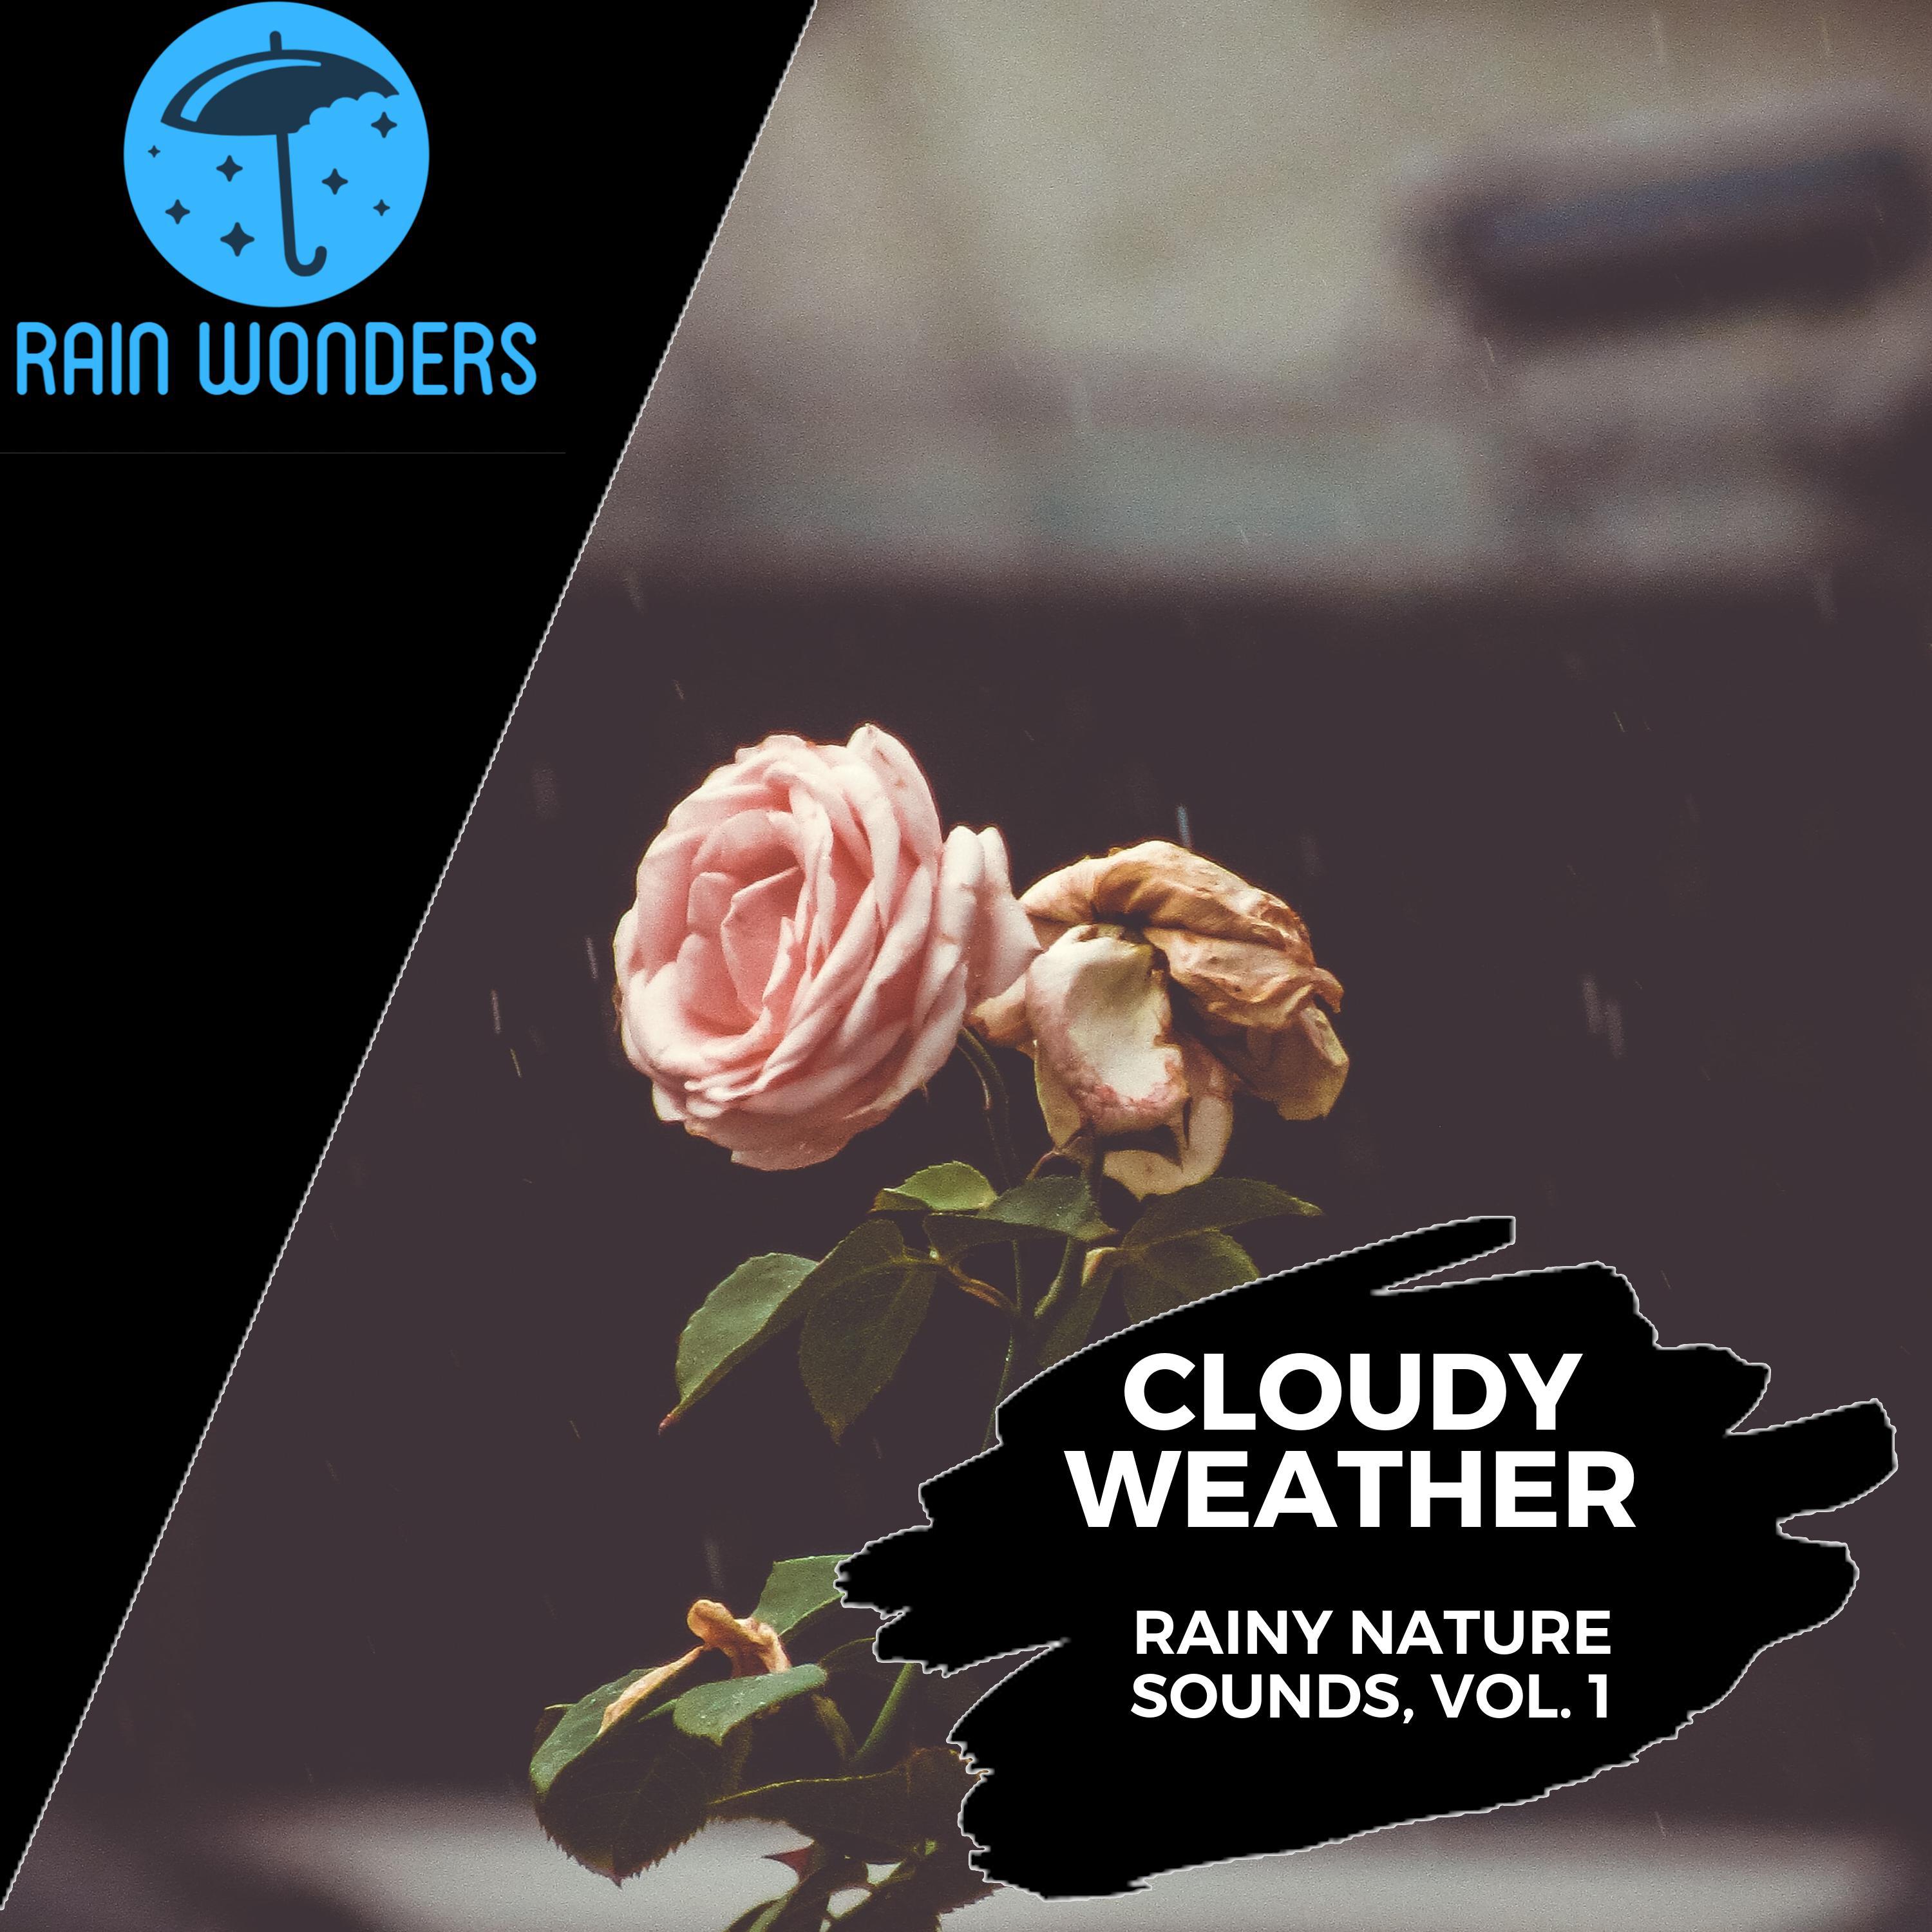 Glorious Rainy Sound Library - Light Rain Music